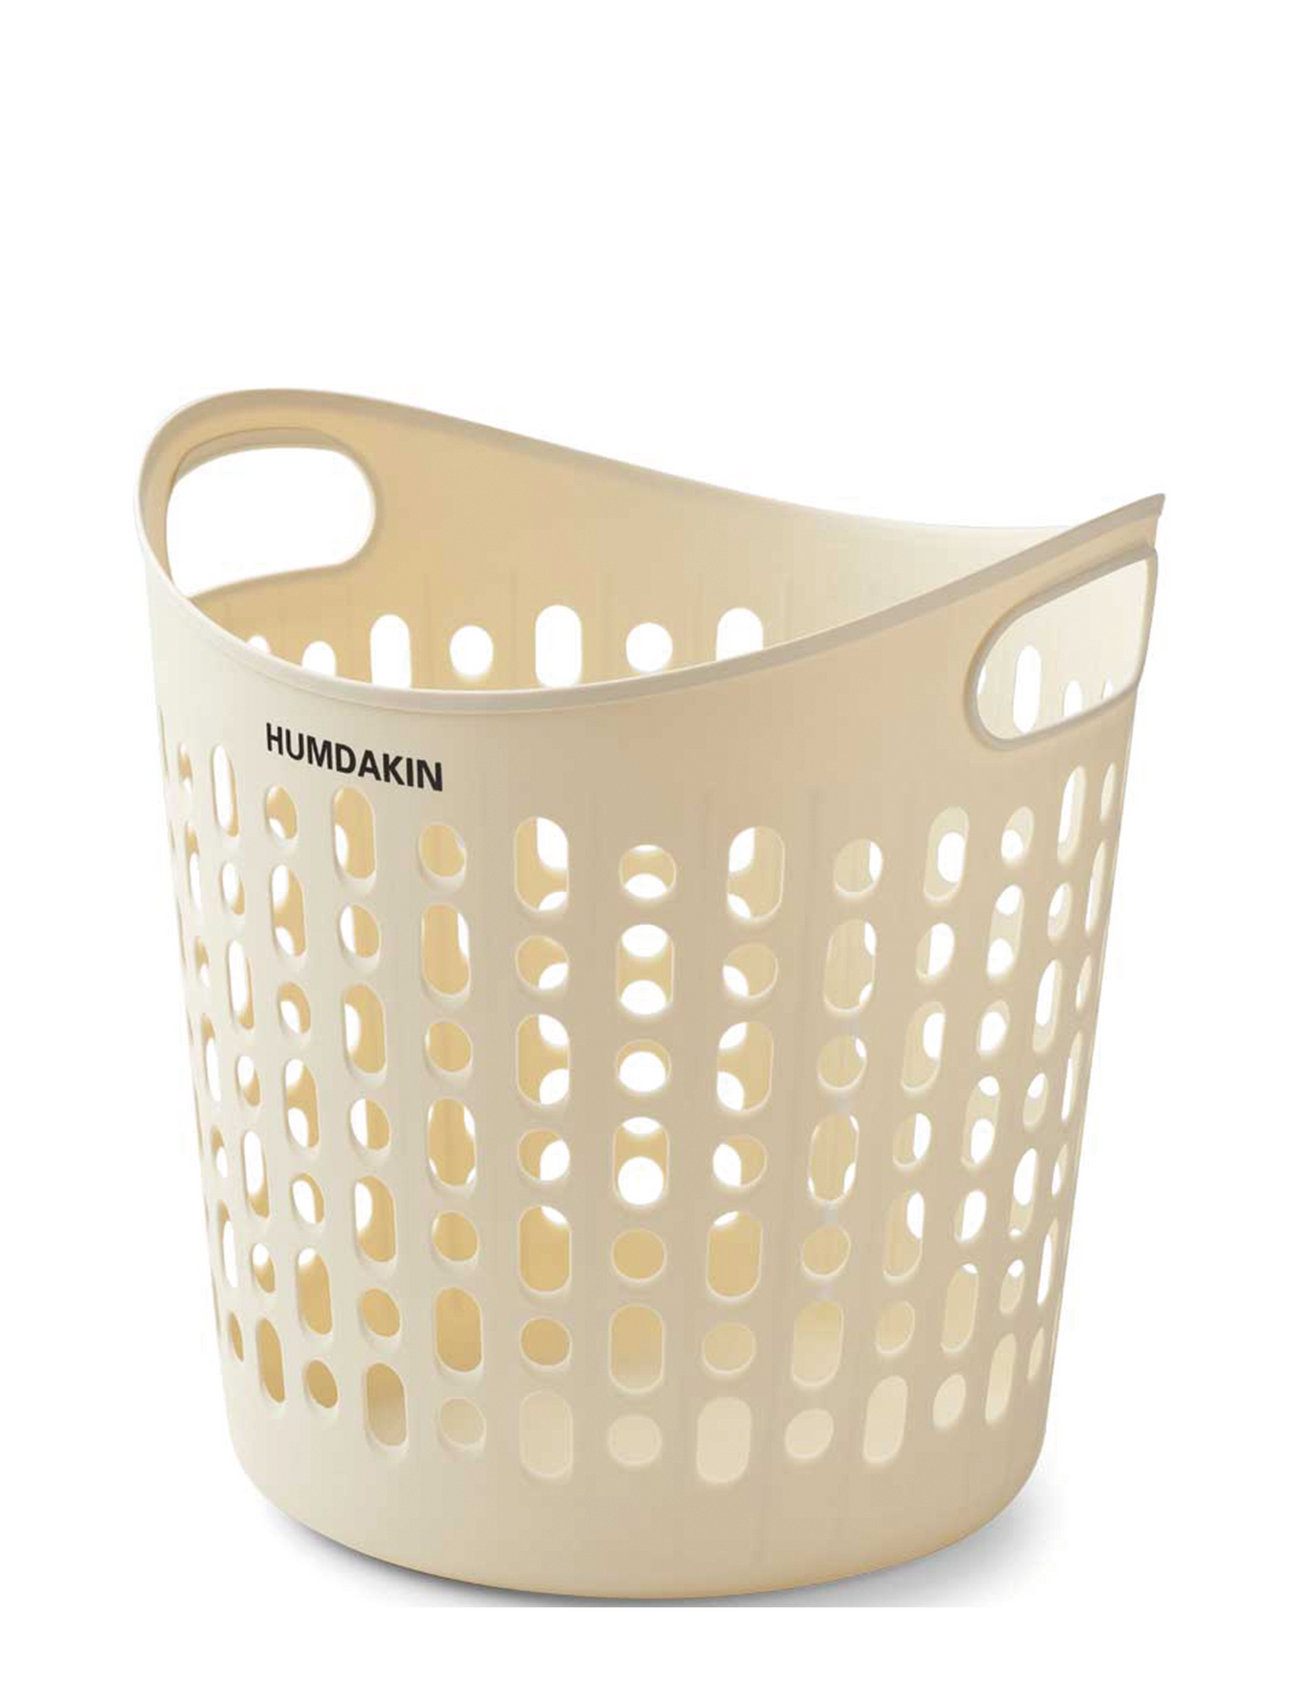 Laundry Basket - Recyclable Plastic Home Storage Laundry Baskets Cream Humdakin